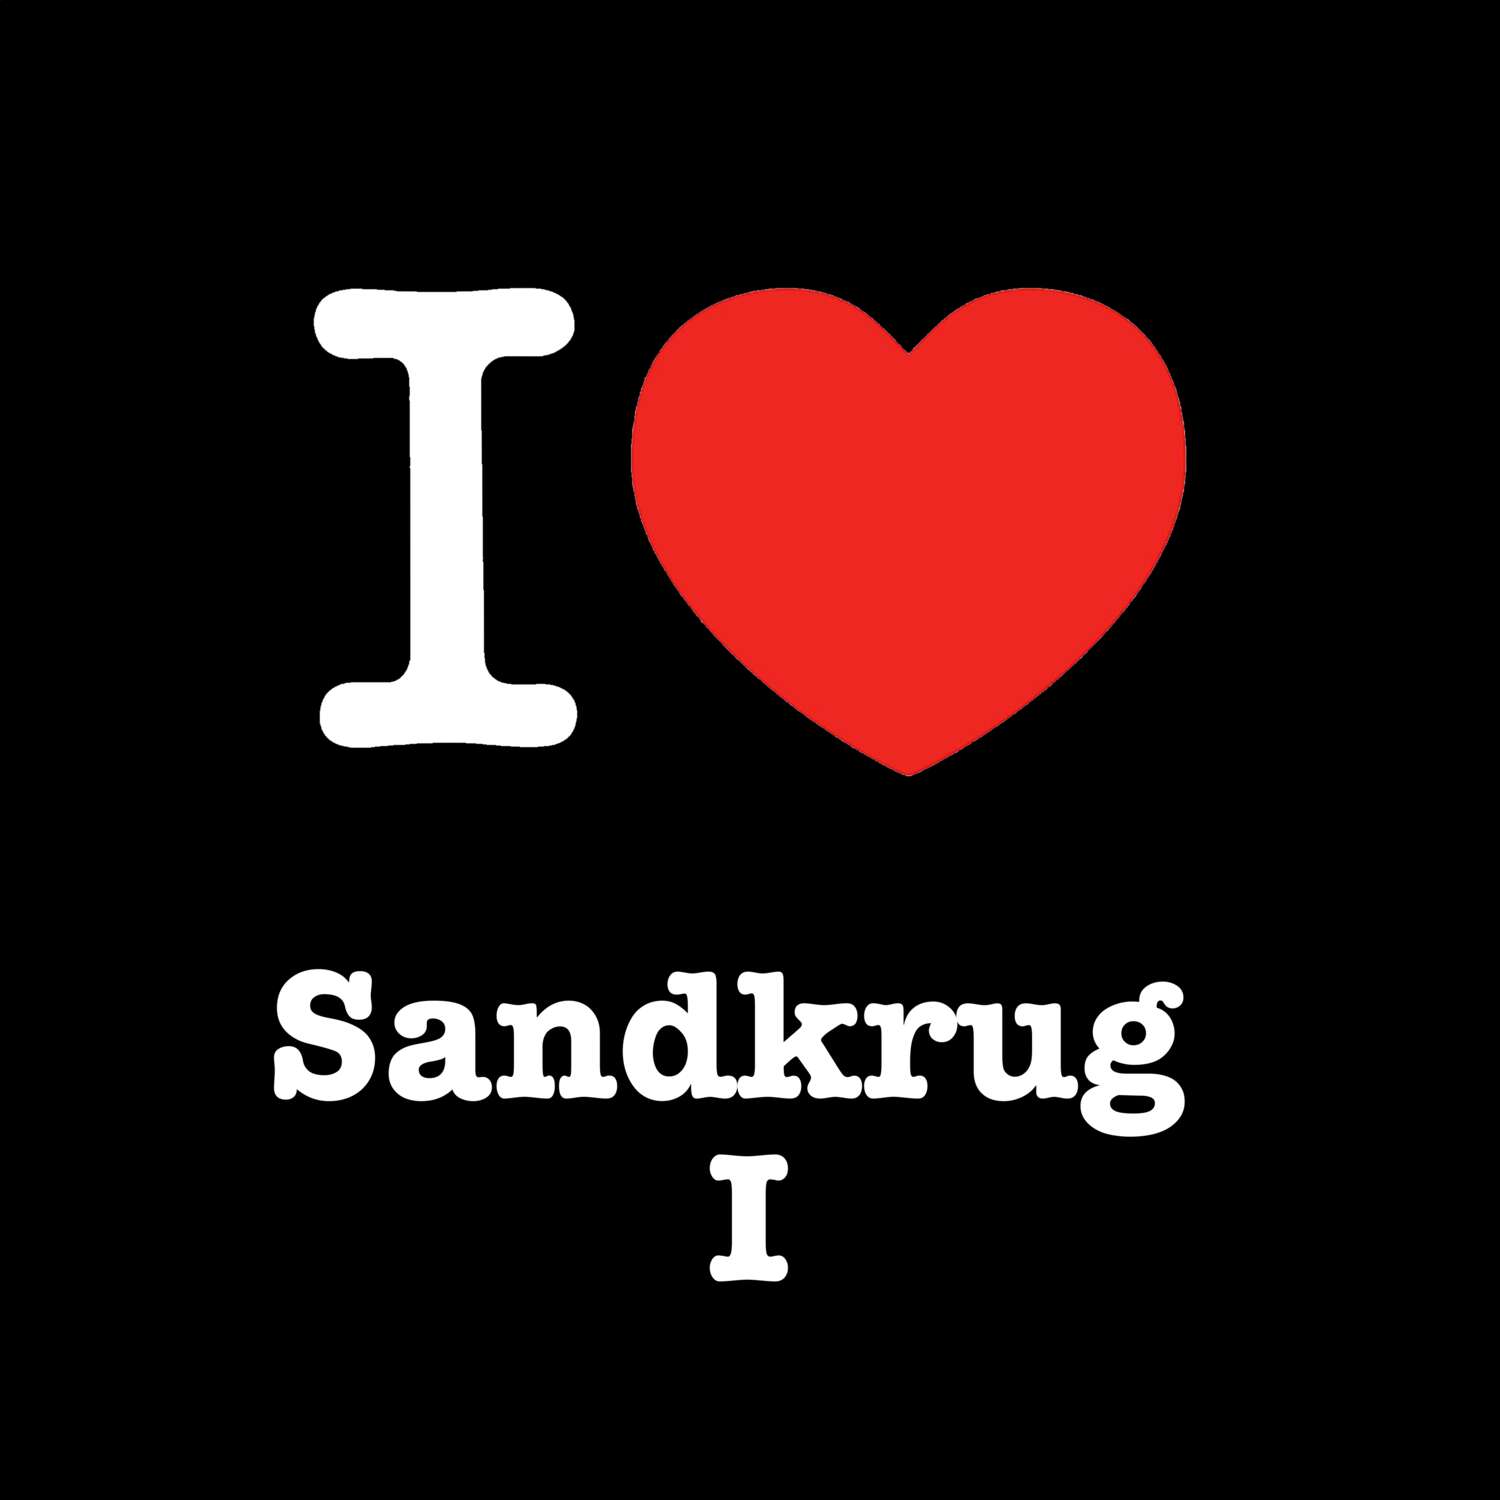 Sandkrug I T-Shirt »I love«